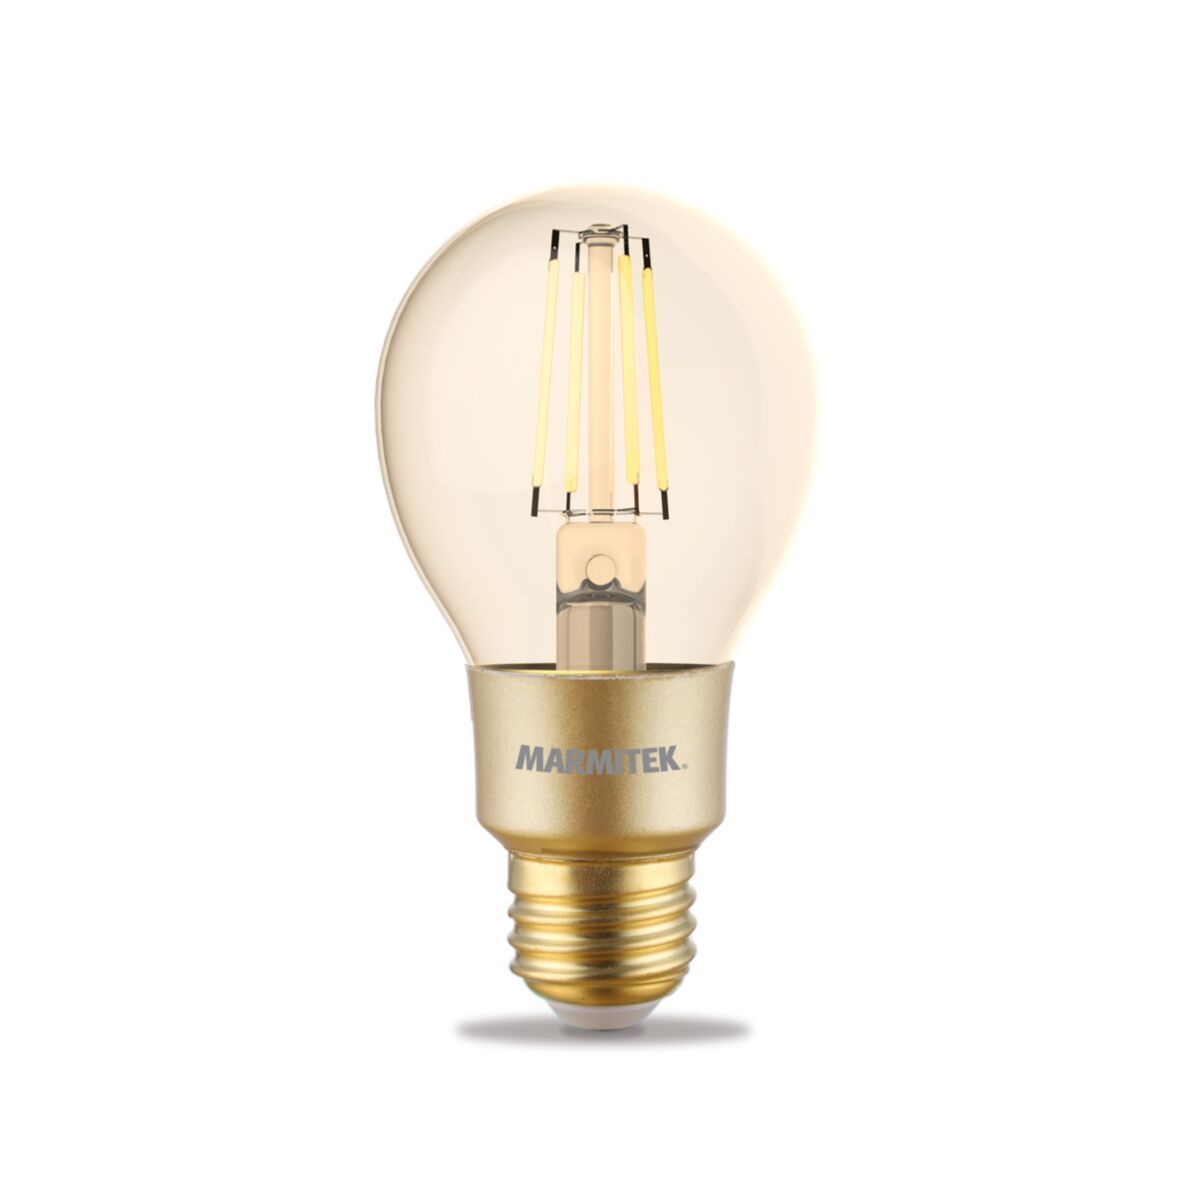 Marmitek Glow MI - Slimme filament lamp